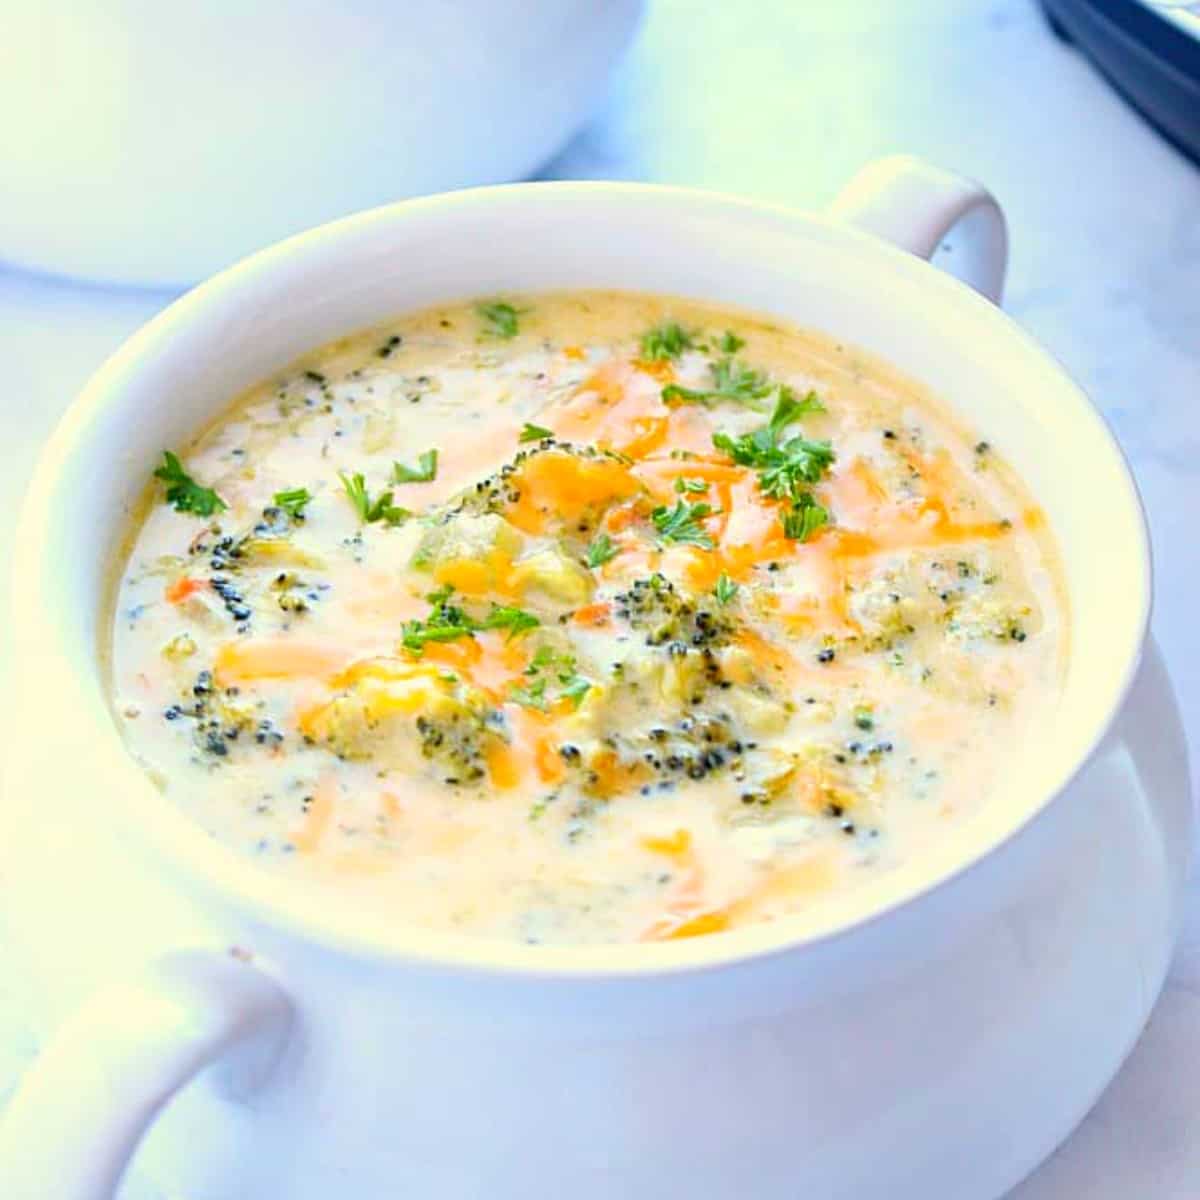 Broccoli cheddar soup in a bowl.